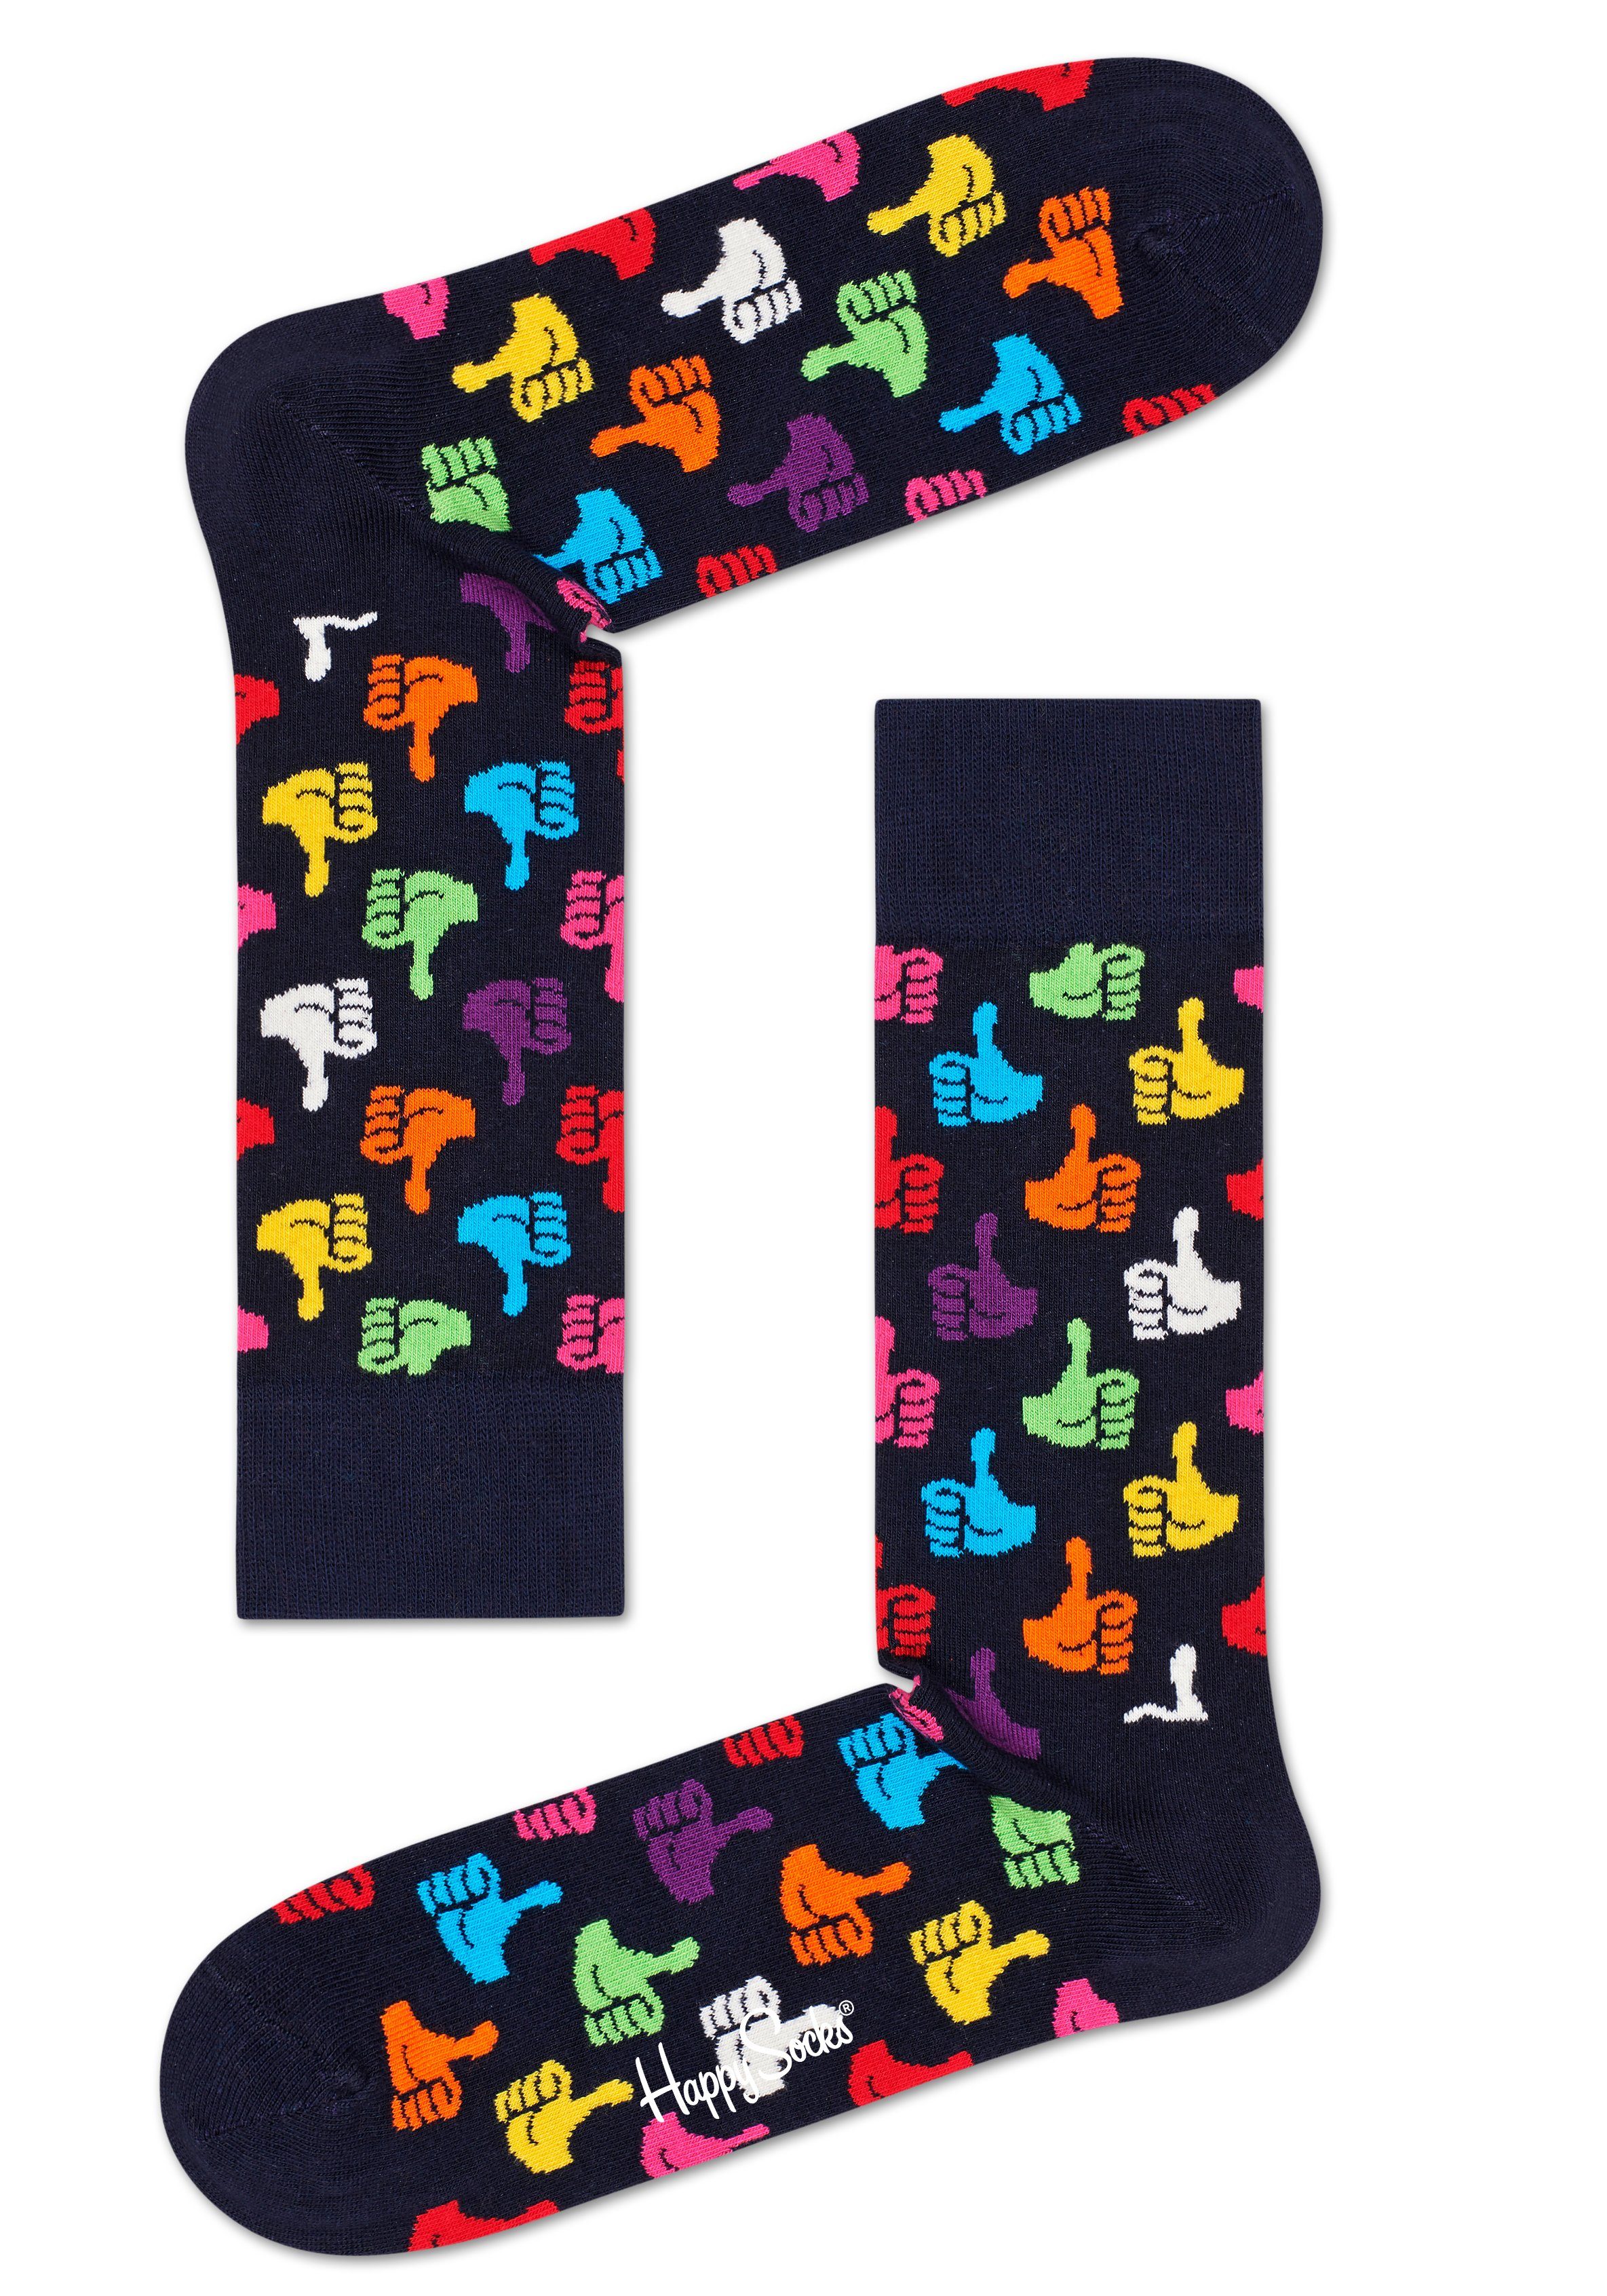 Happy Socks Socken »Thumbs Up« mit knalligen Daumen Hoch Motiven